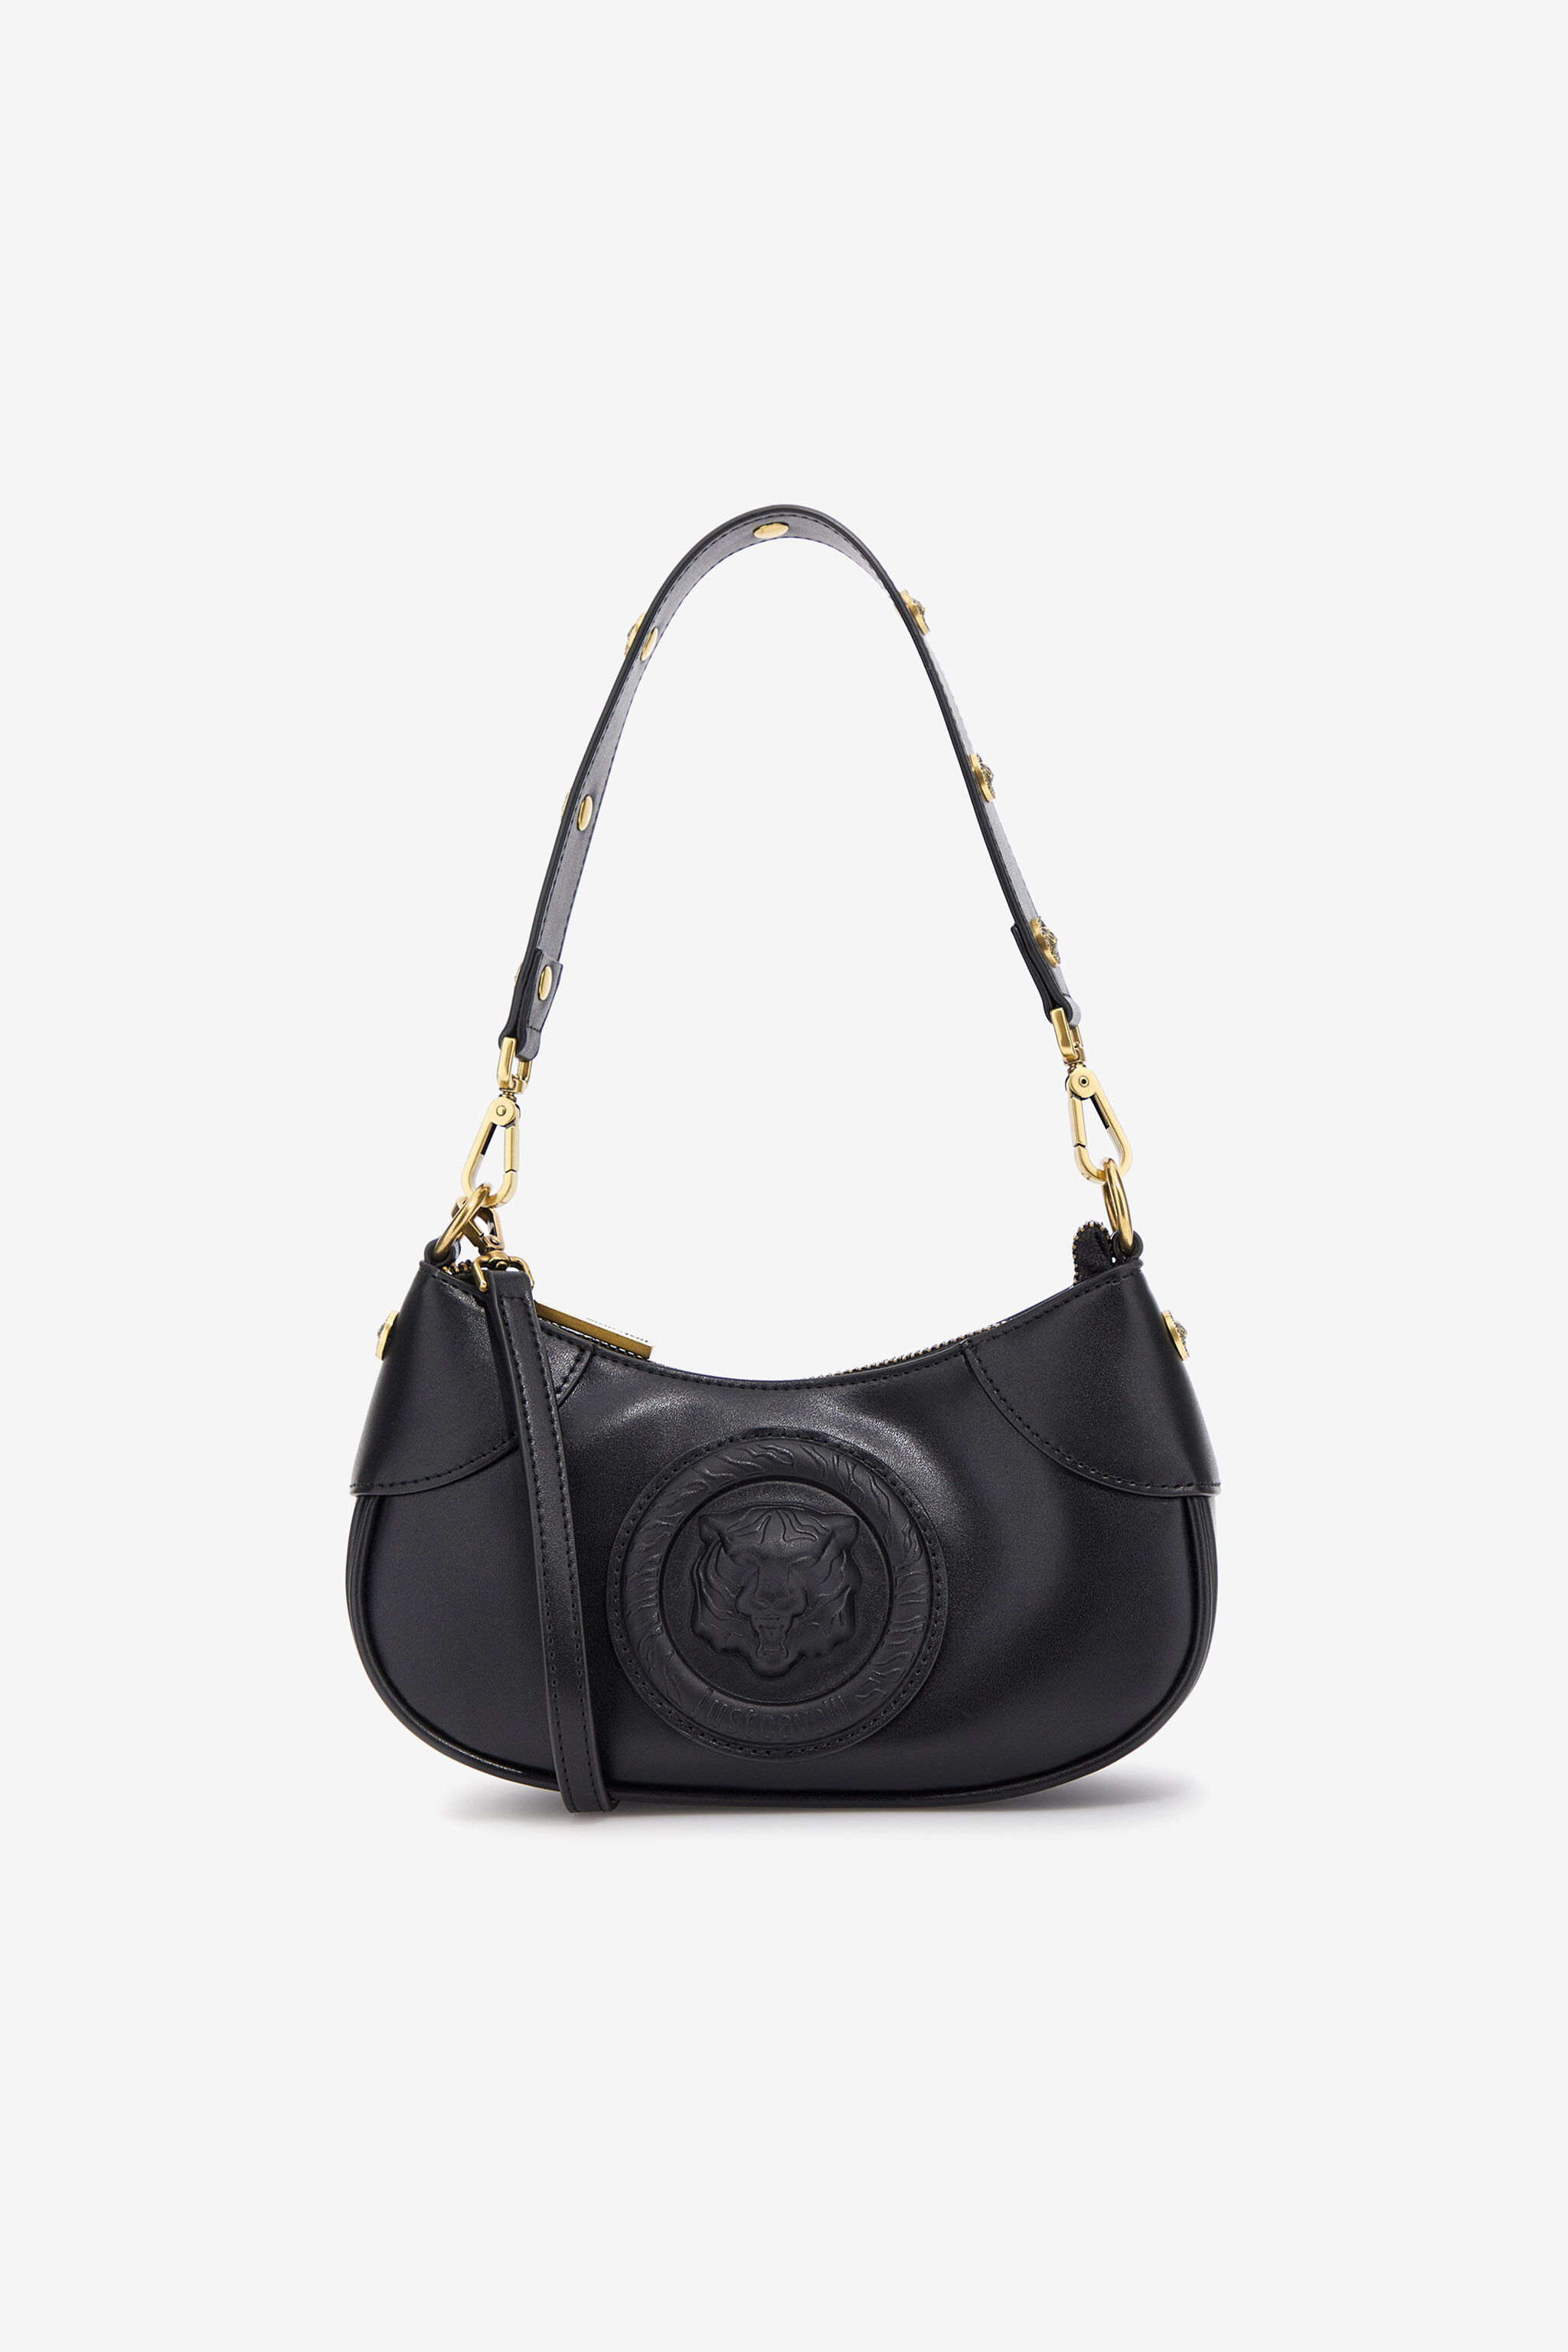 Just Cavalli Handbags | Mercari